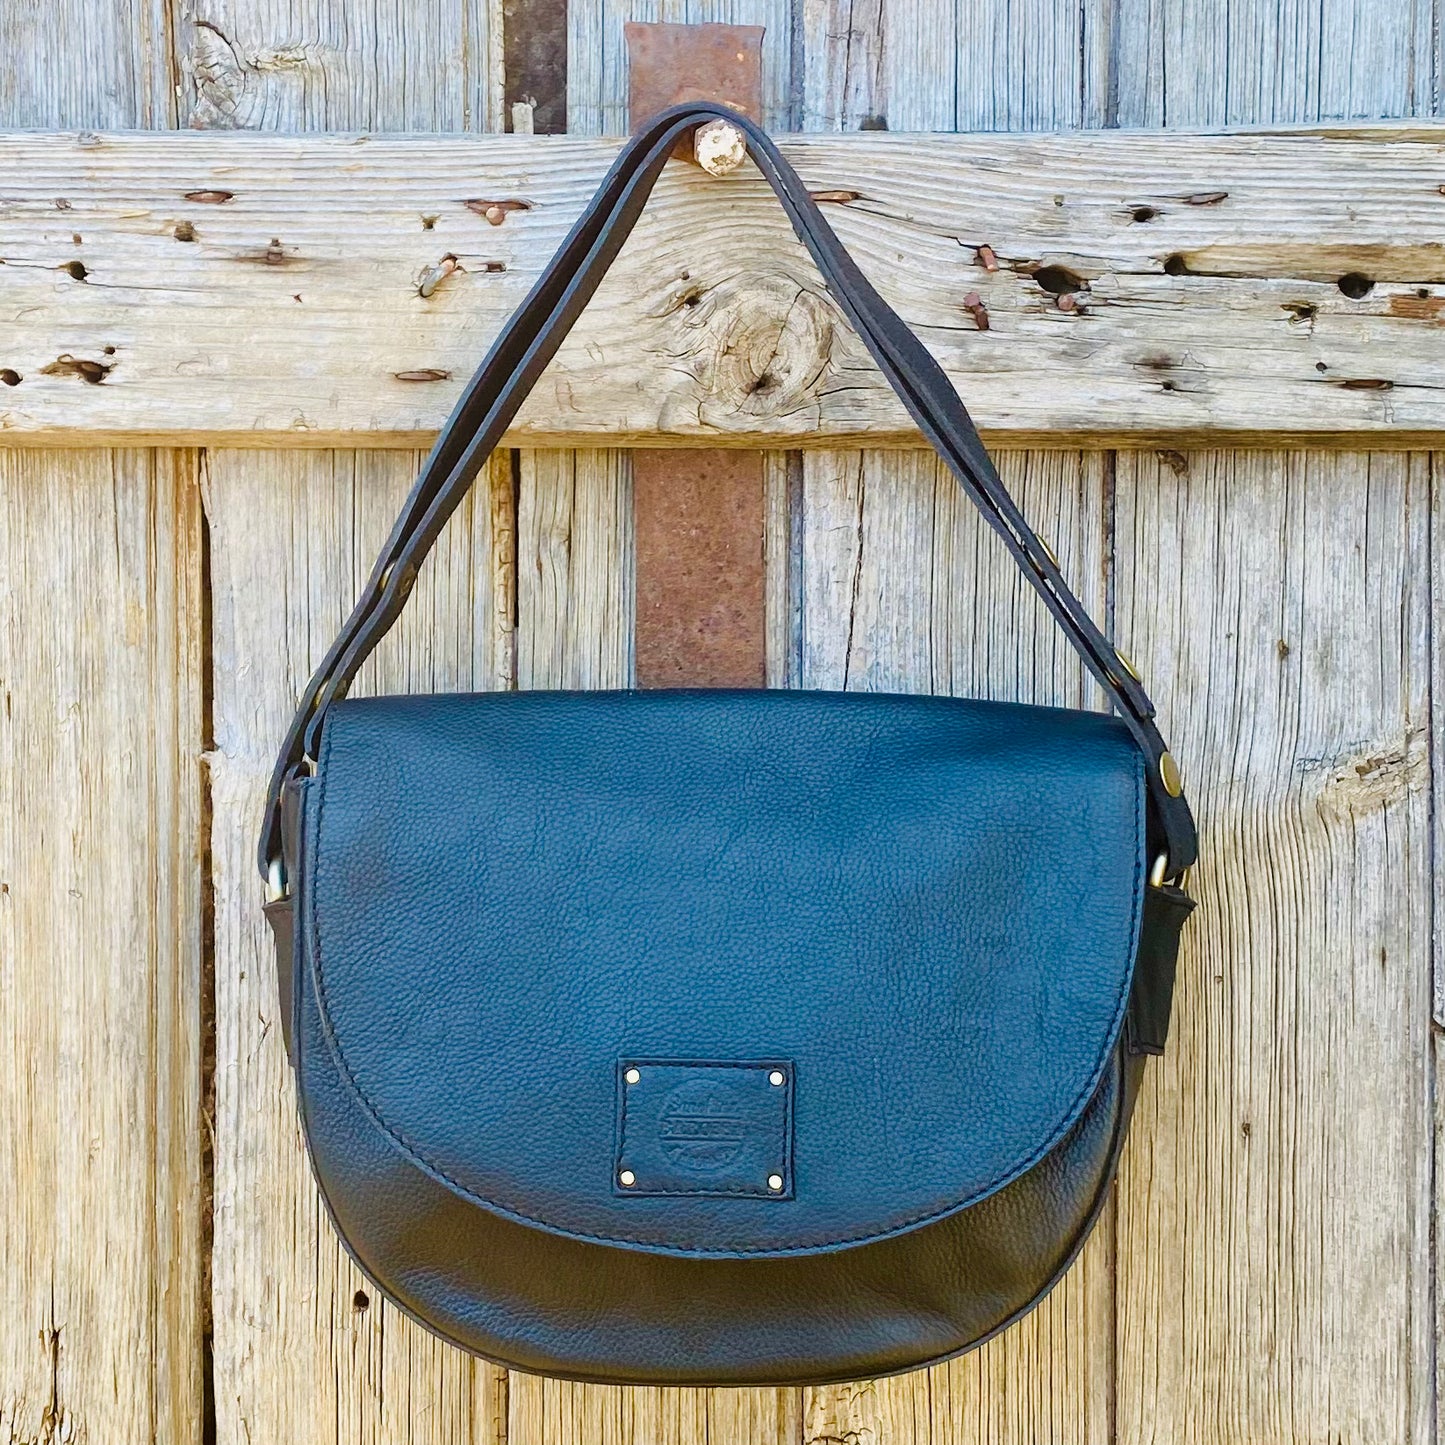 Vintage Leather Saddle Handbag